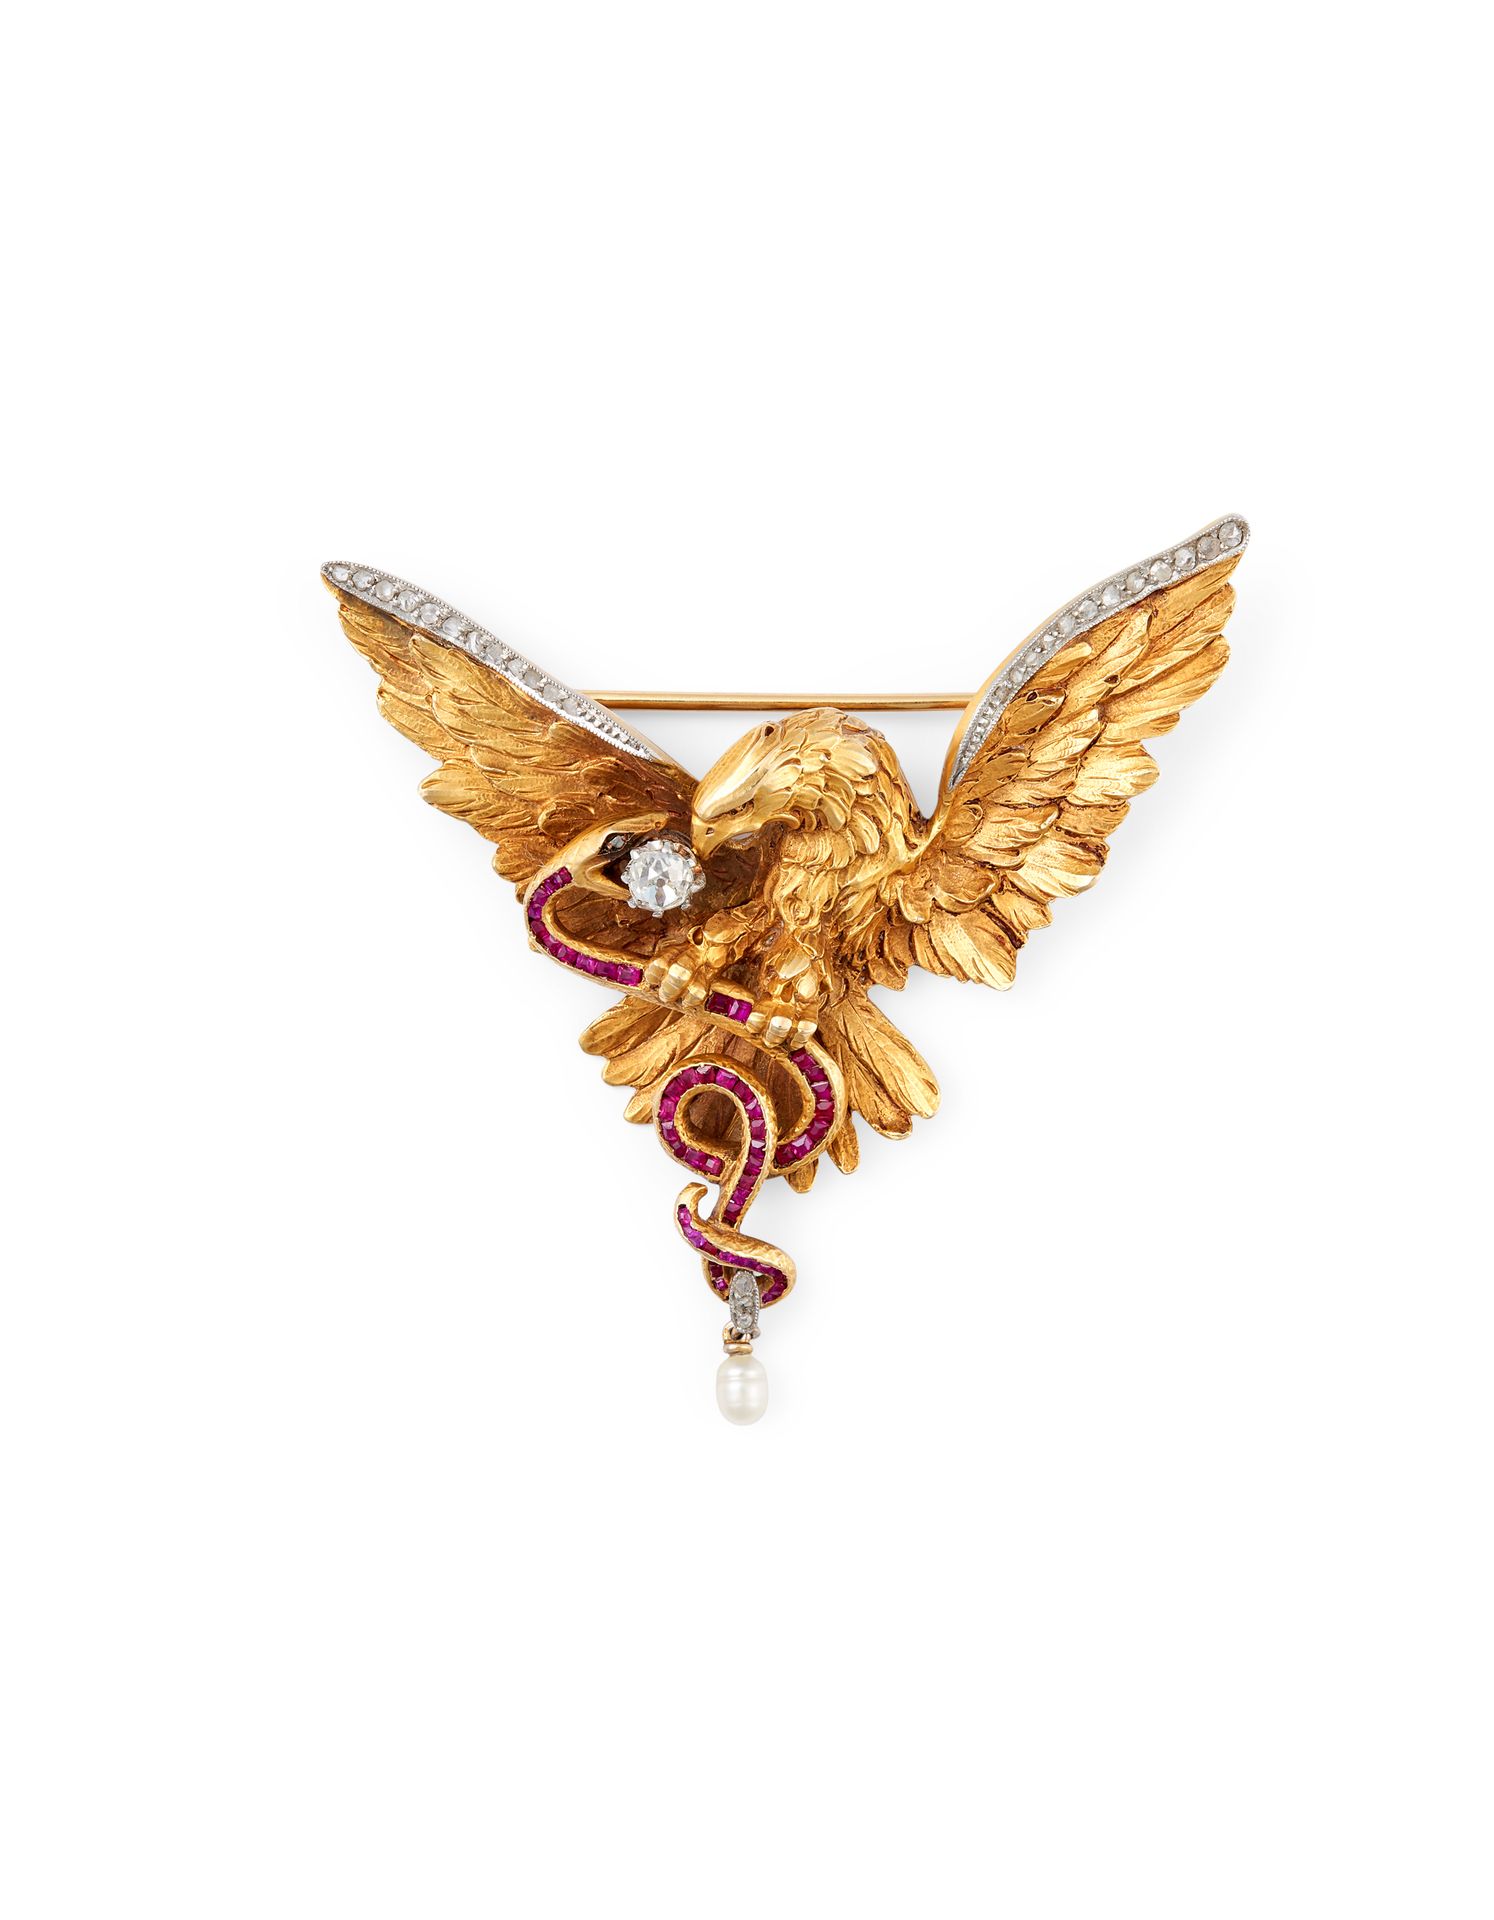 Null ART NOUVEAU EAGLE BROOCH 18K白金和黄金，展开的翅膀上镶嵌着玫瑰式切割钻石，嘴里叼着一条镶有校准红宝石的蛇，手里拿着一颗老式&hellip;